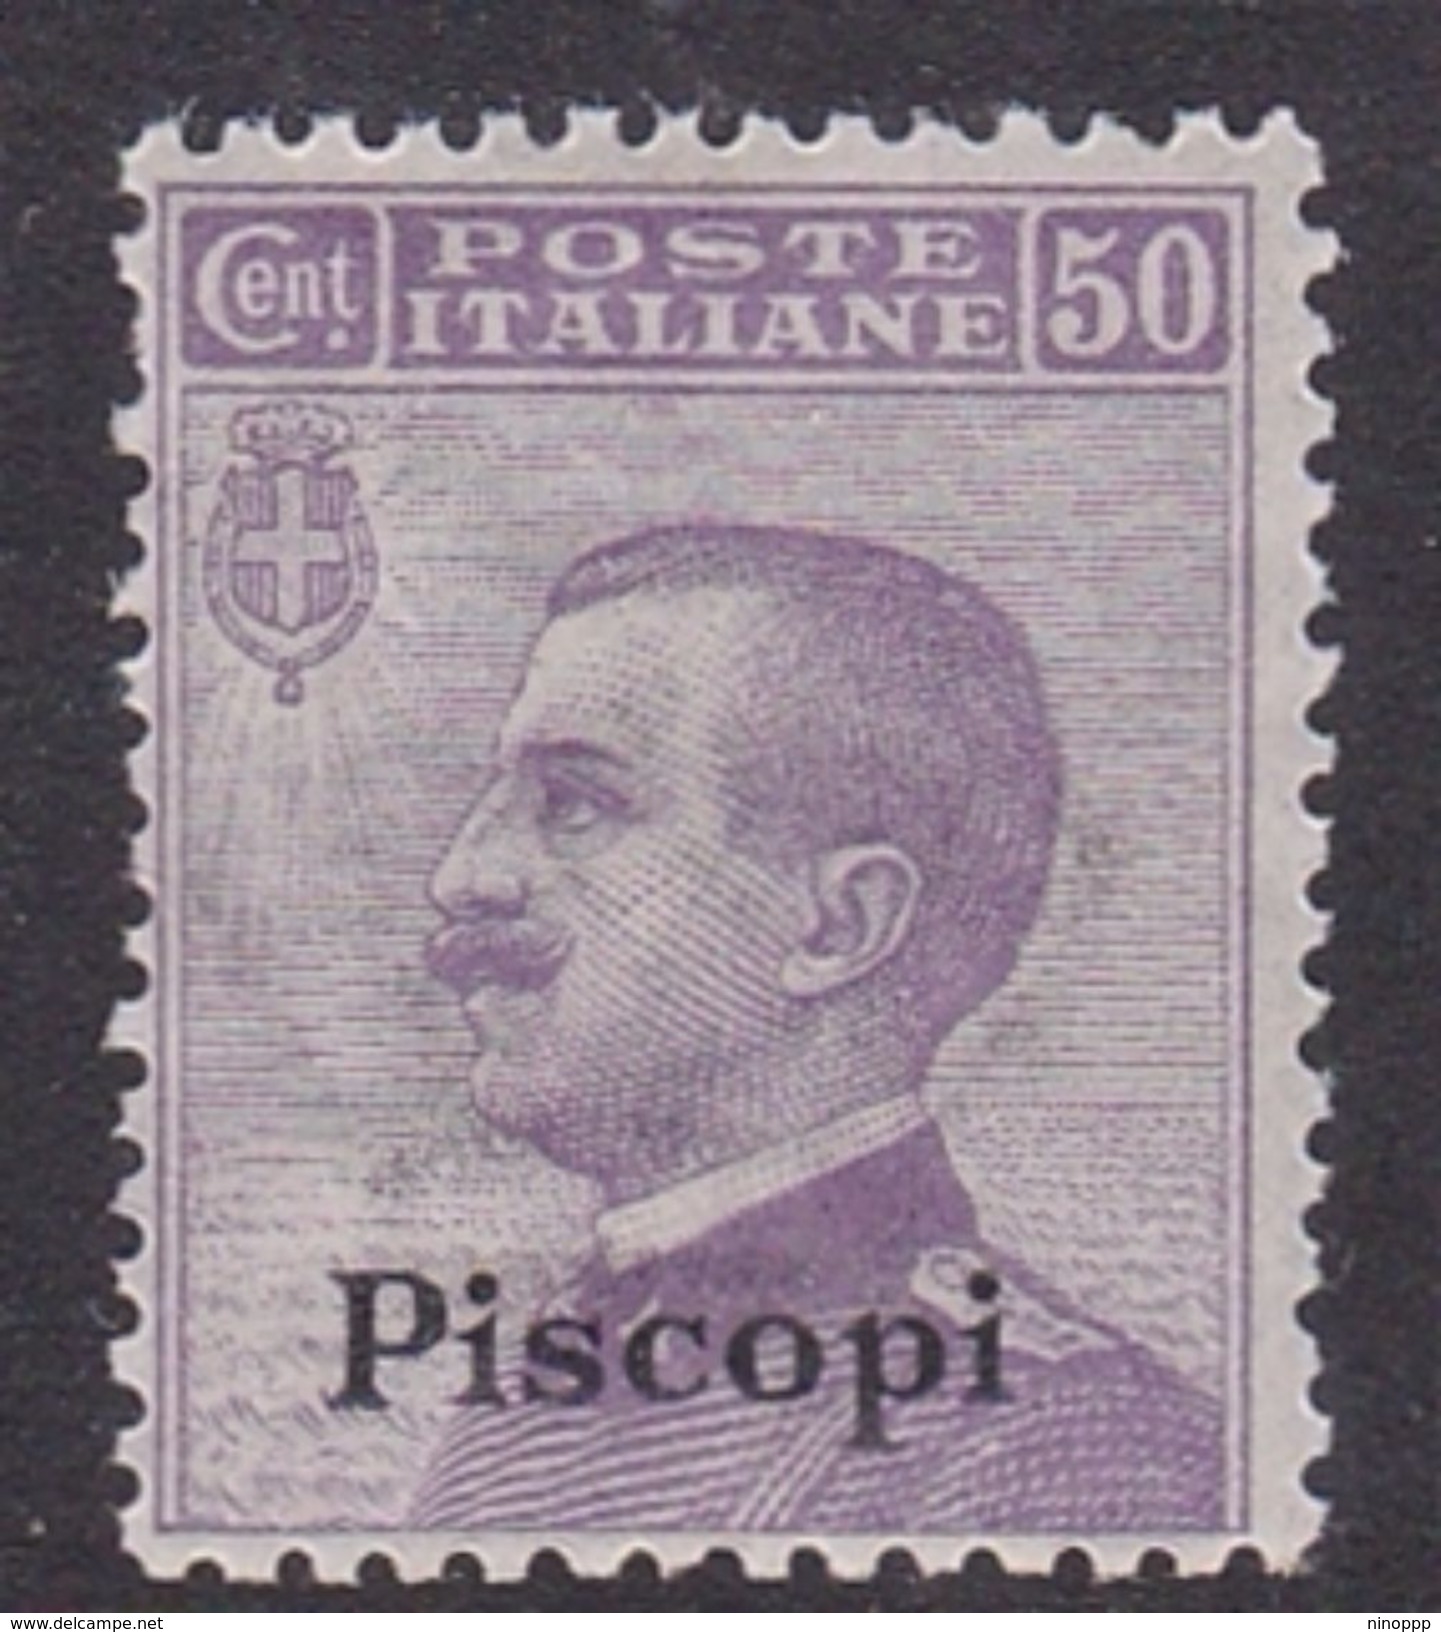 Italy-Colonies And Territories-Aegean-Piscopi S 7  1912 50c Violet MNH - Ägäis (Piscopi)